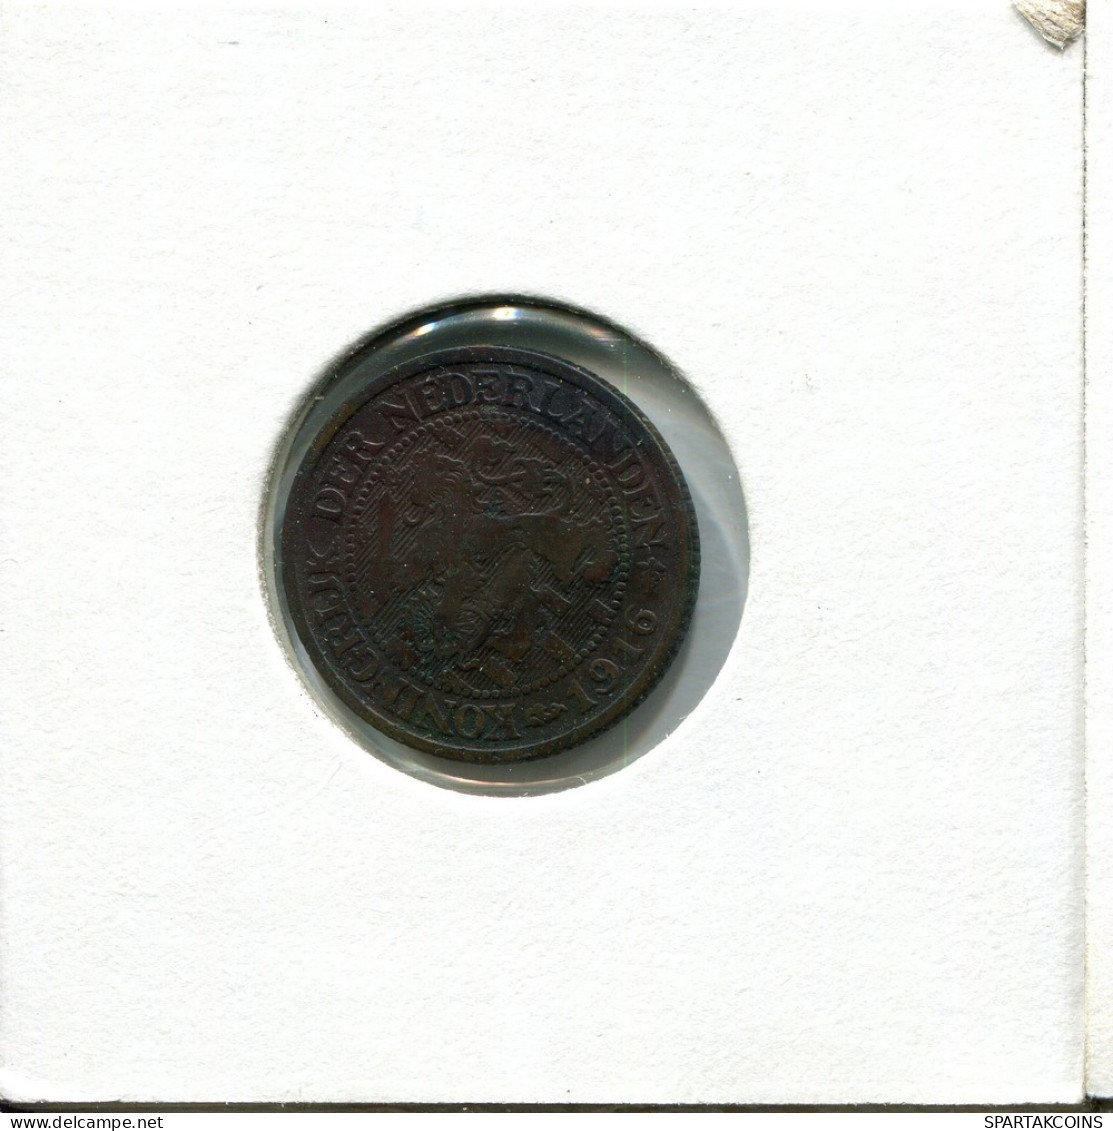 1 CENT 1916 NIEDERLANDE NETHERLANDS Münze #AU257.D.A - 1 Cent